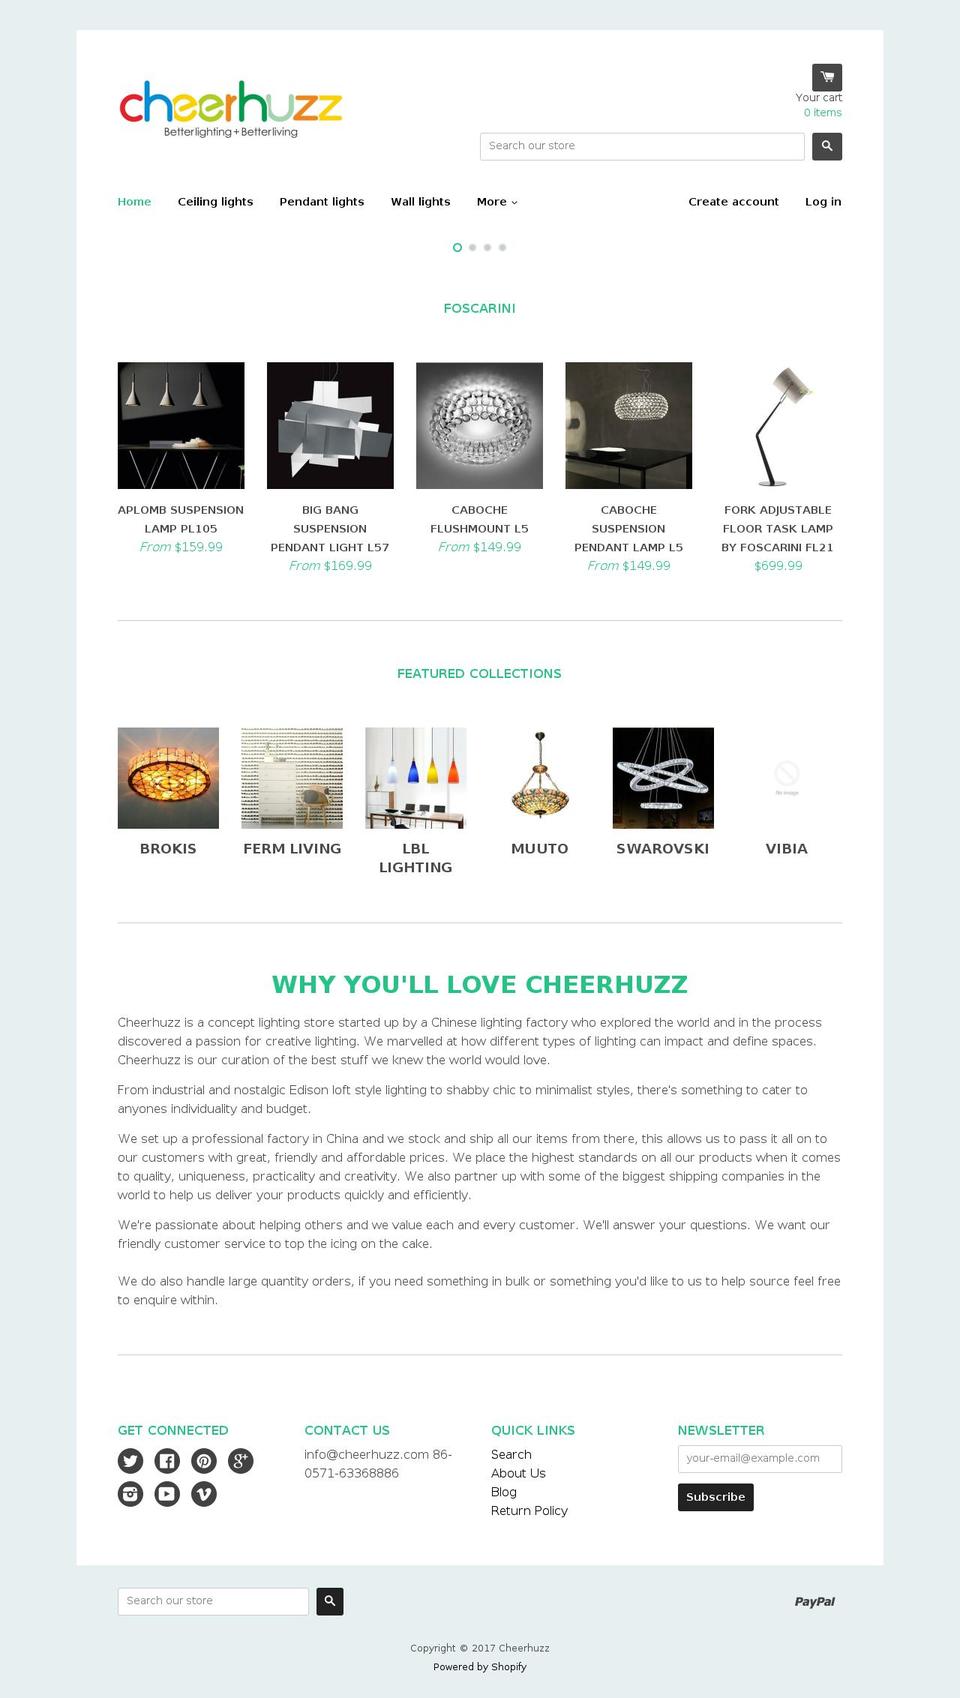 cheerhuzz.com shopify website screenshot